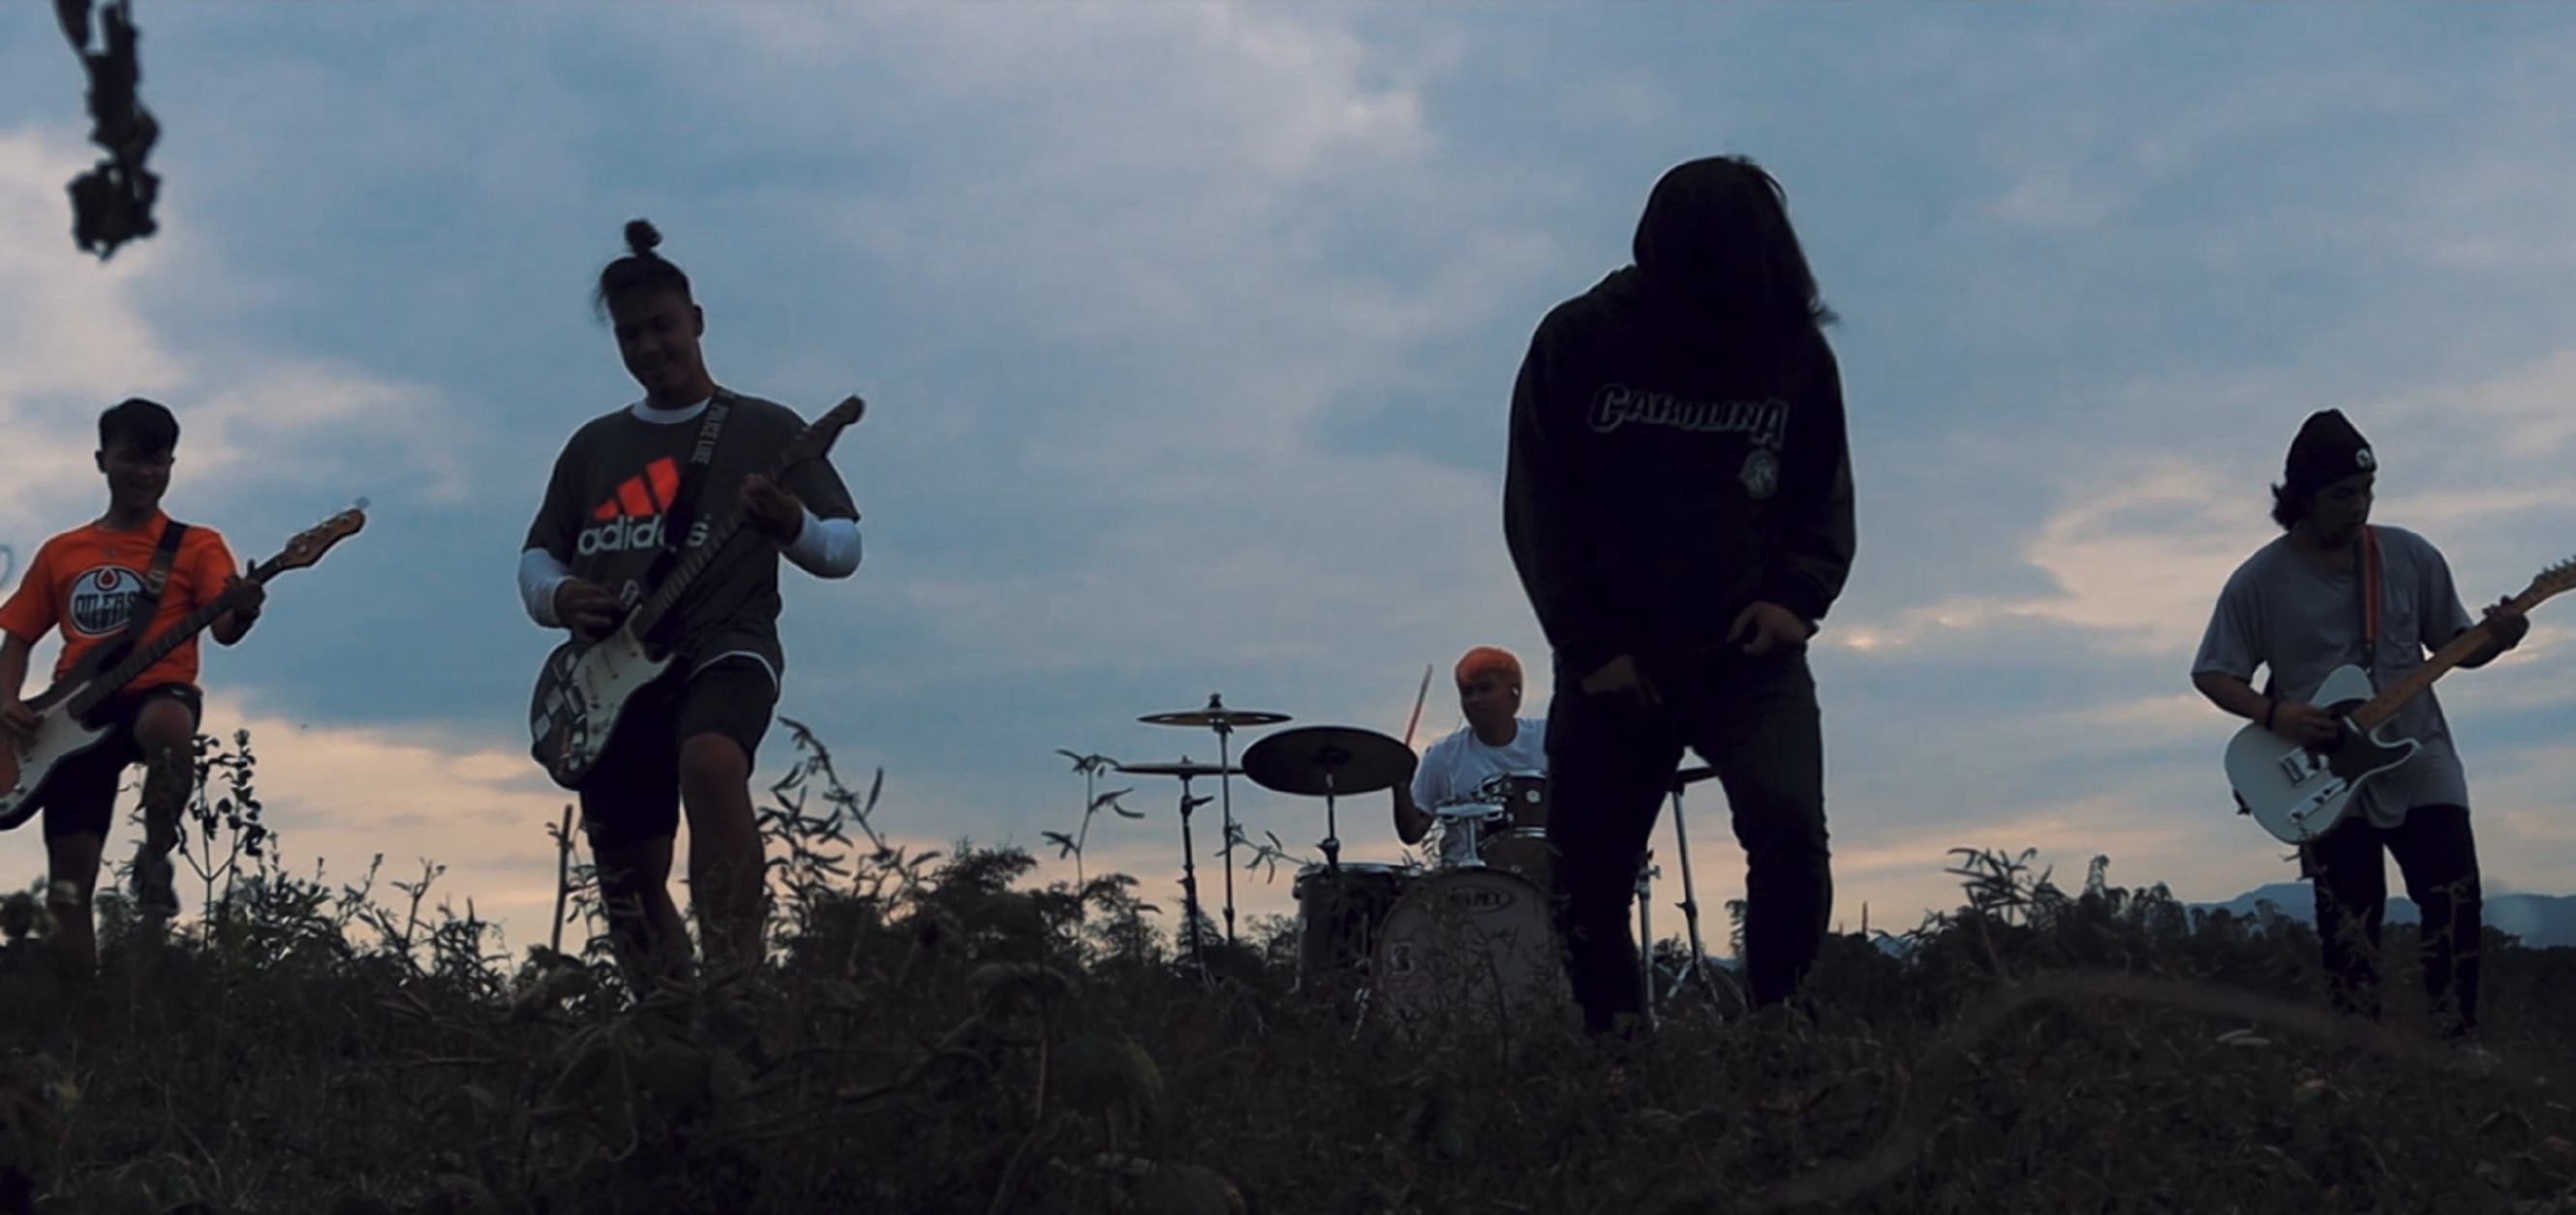 WATCH: Cavite pop punk band HTTM release their first single ‘Empty’